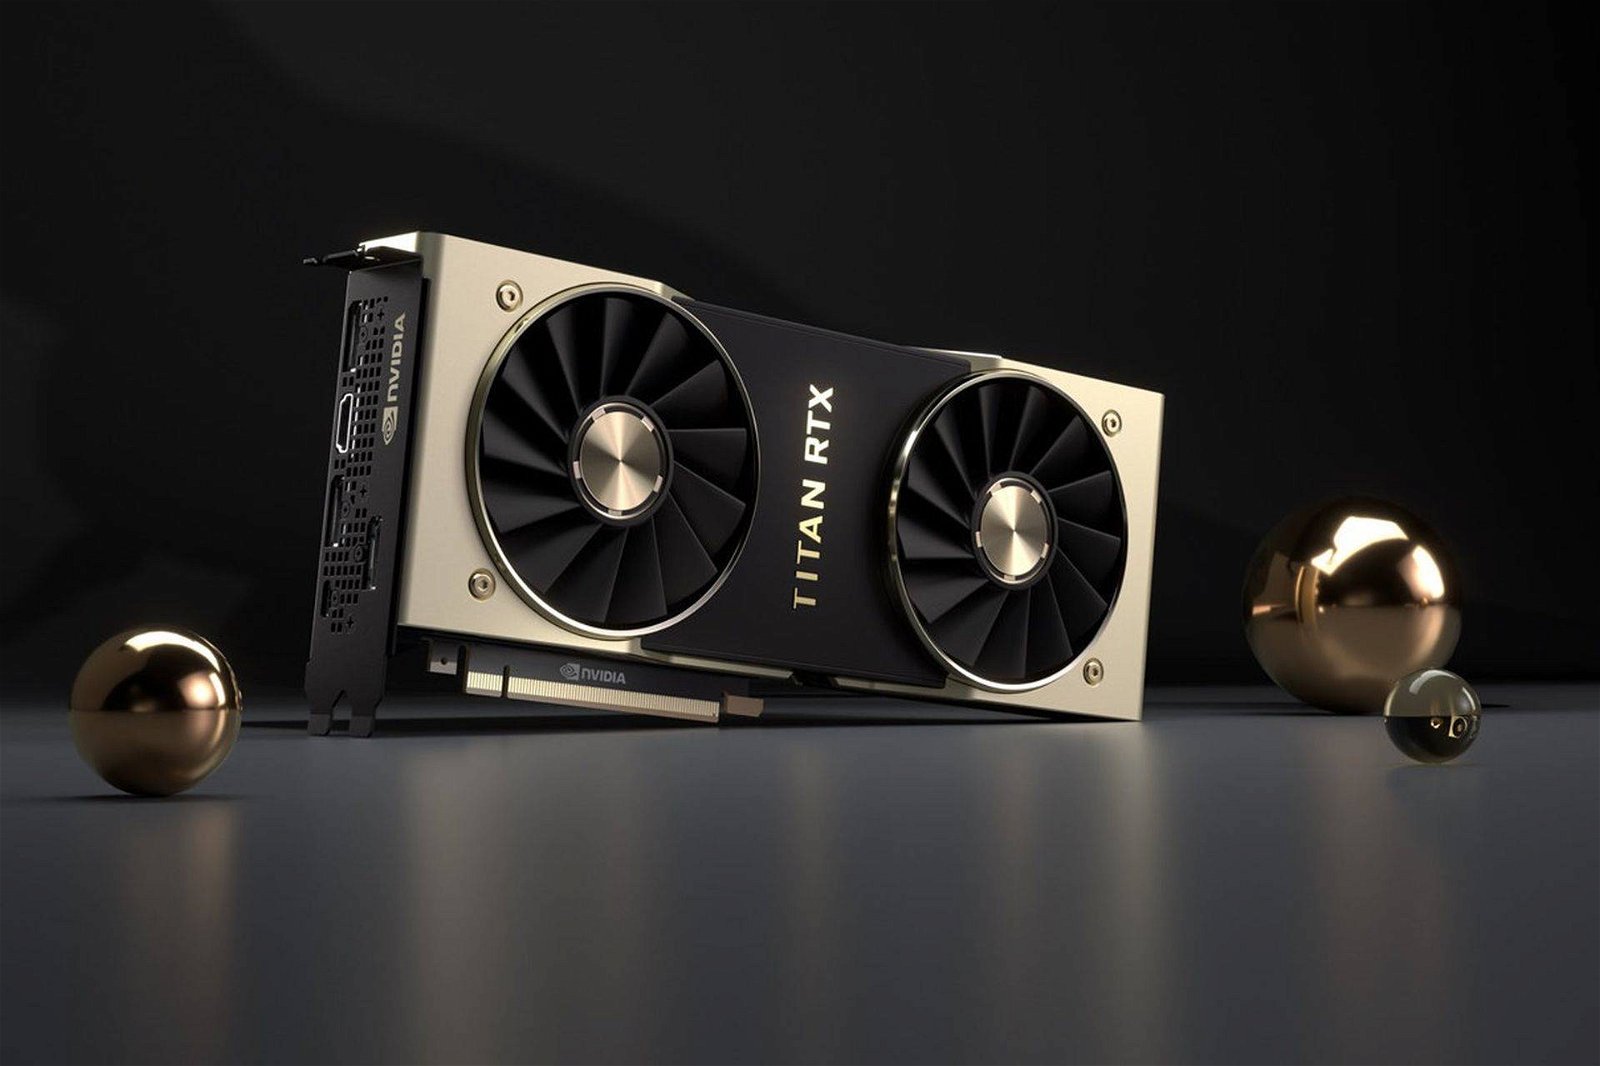 Immagine di Nvidia Titan RTX ufficiale, GPU Turing al top per ricercatori e creatori di contenuti